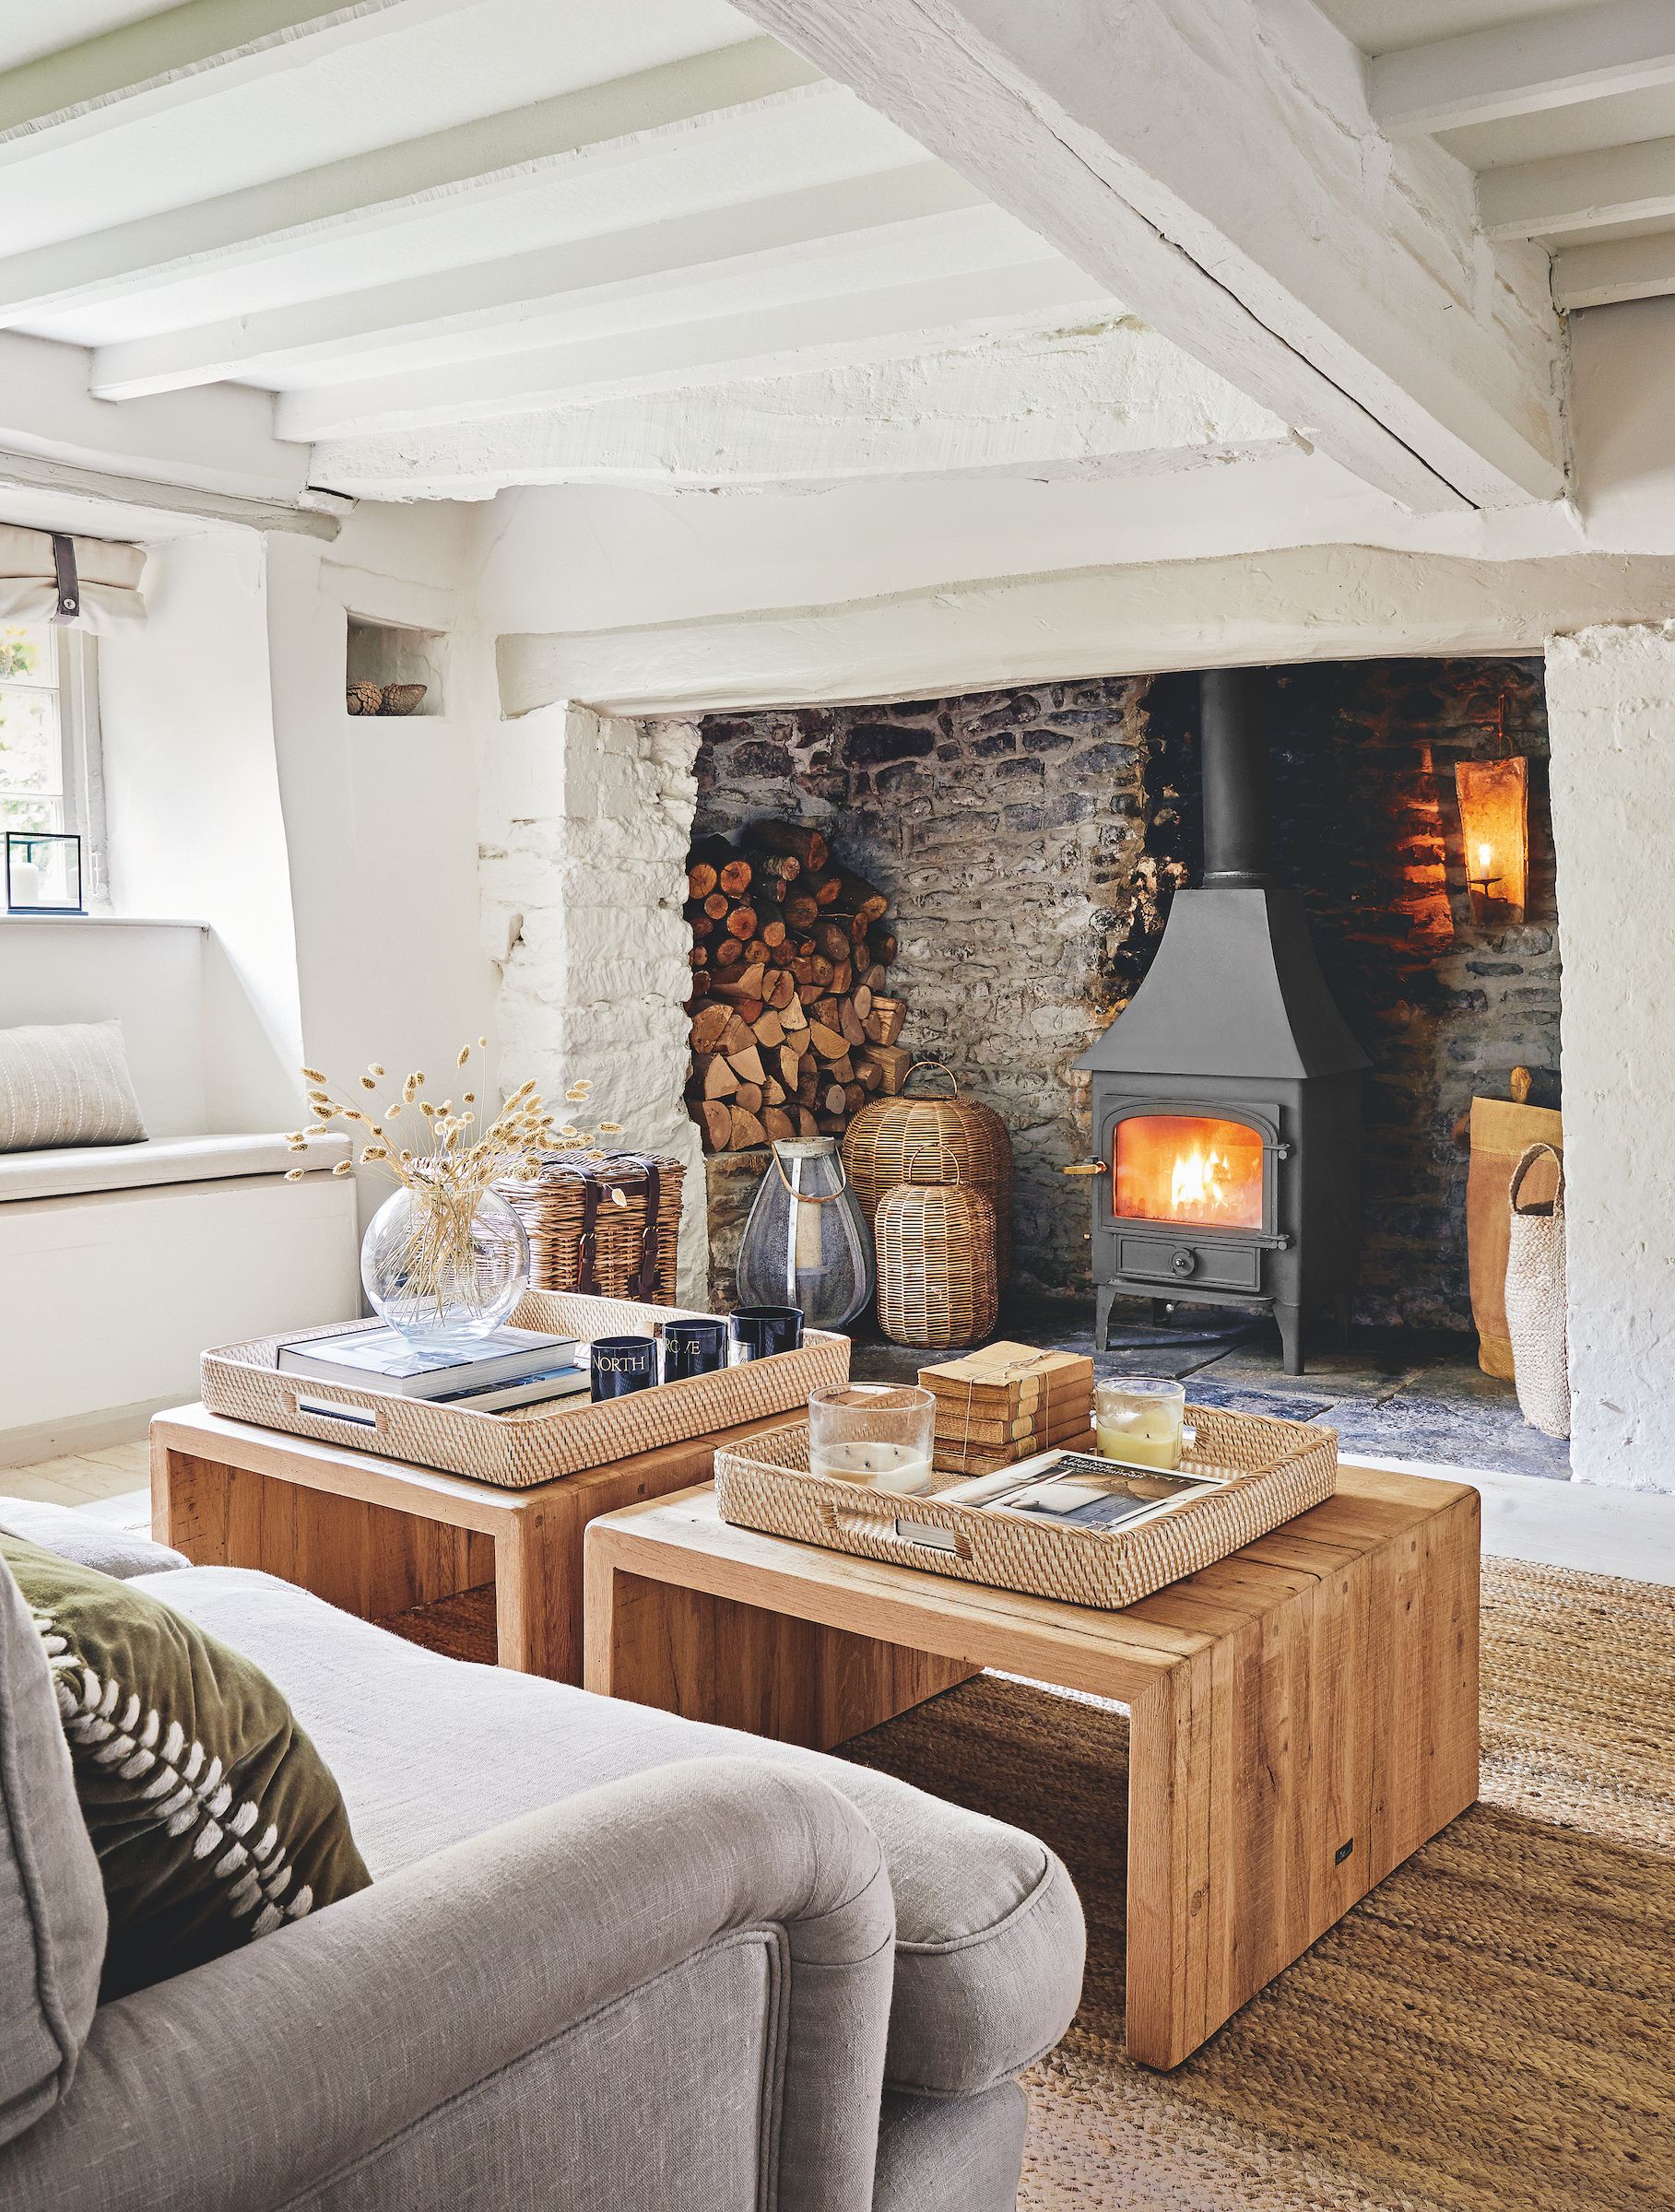 Farmhouse living room ideas – rustic designs for a cozy scheme